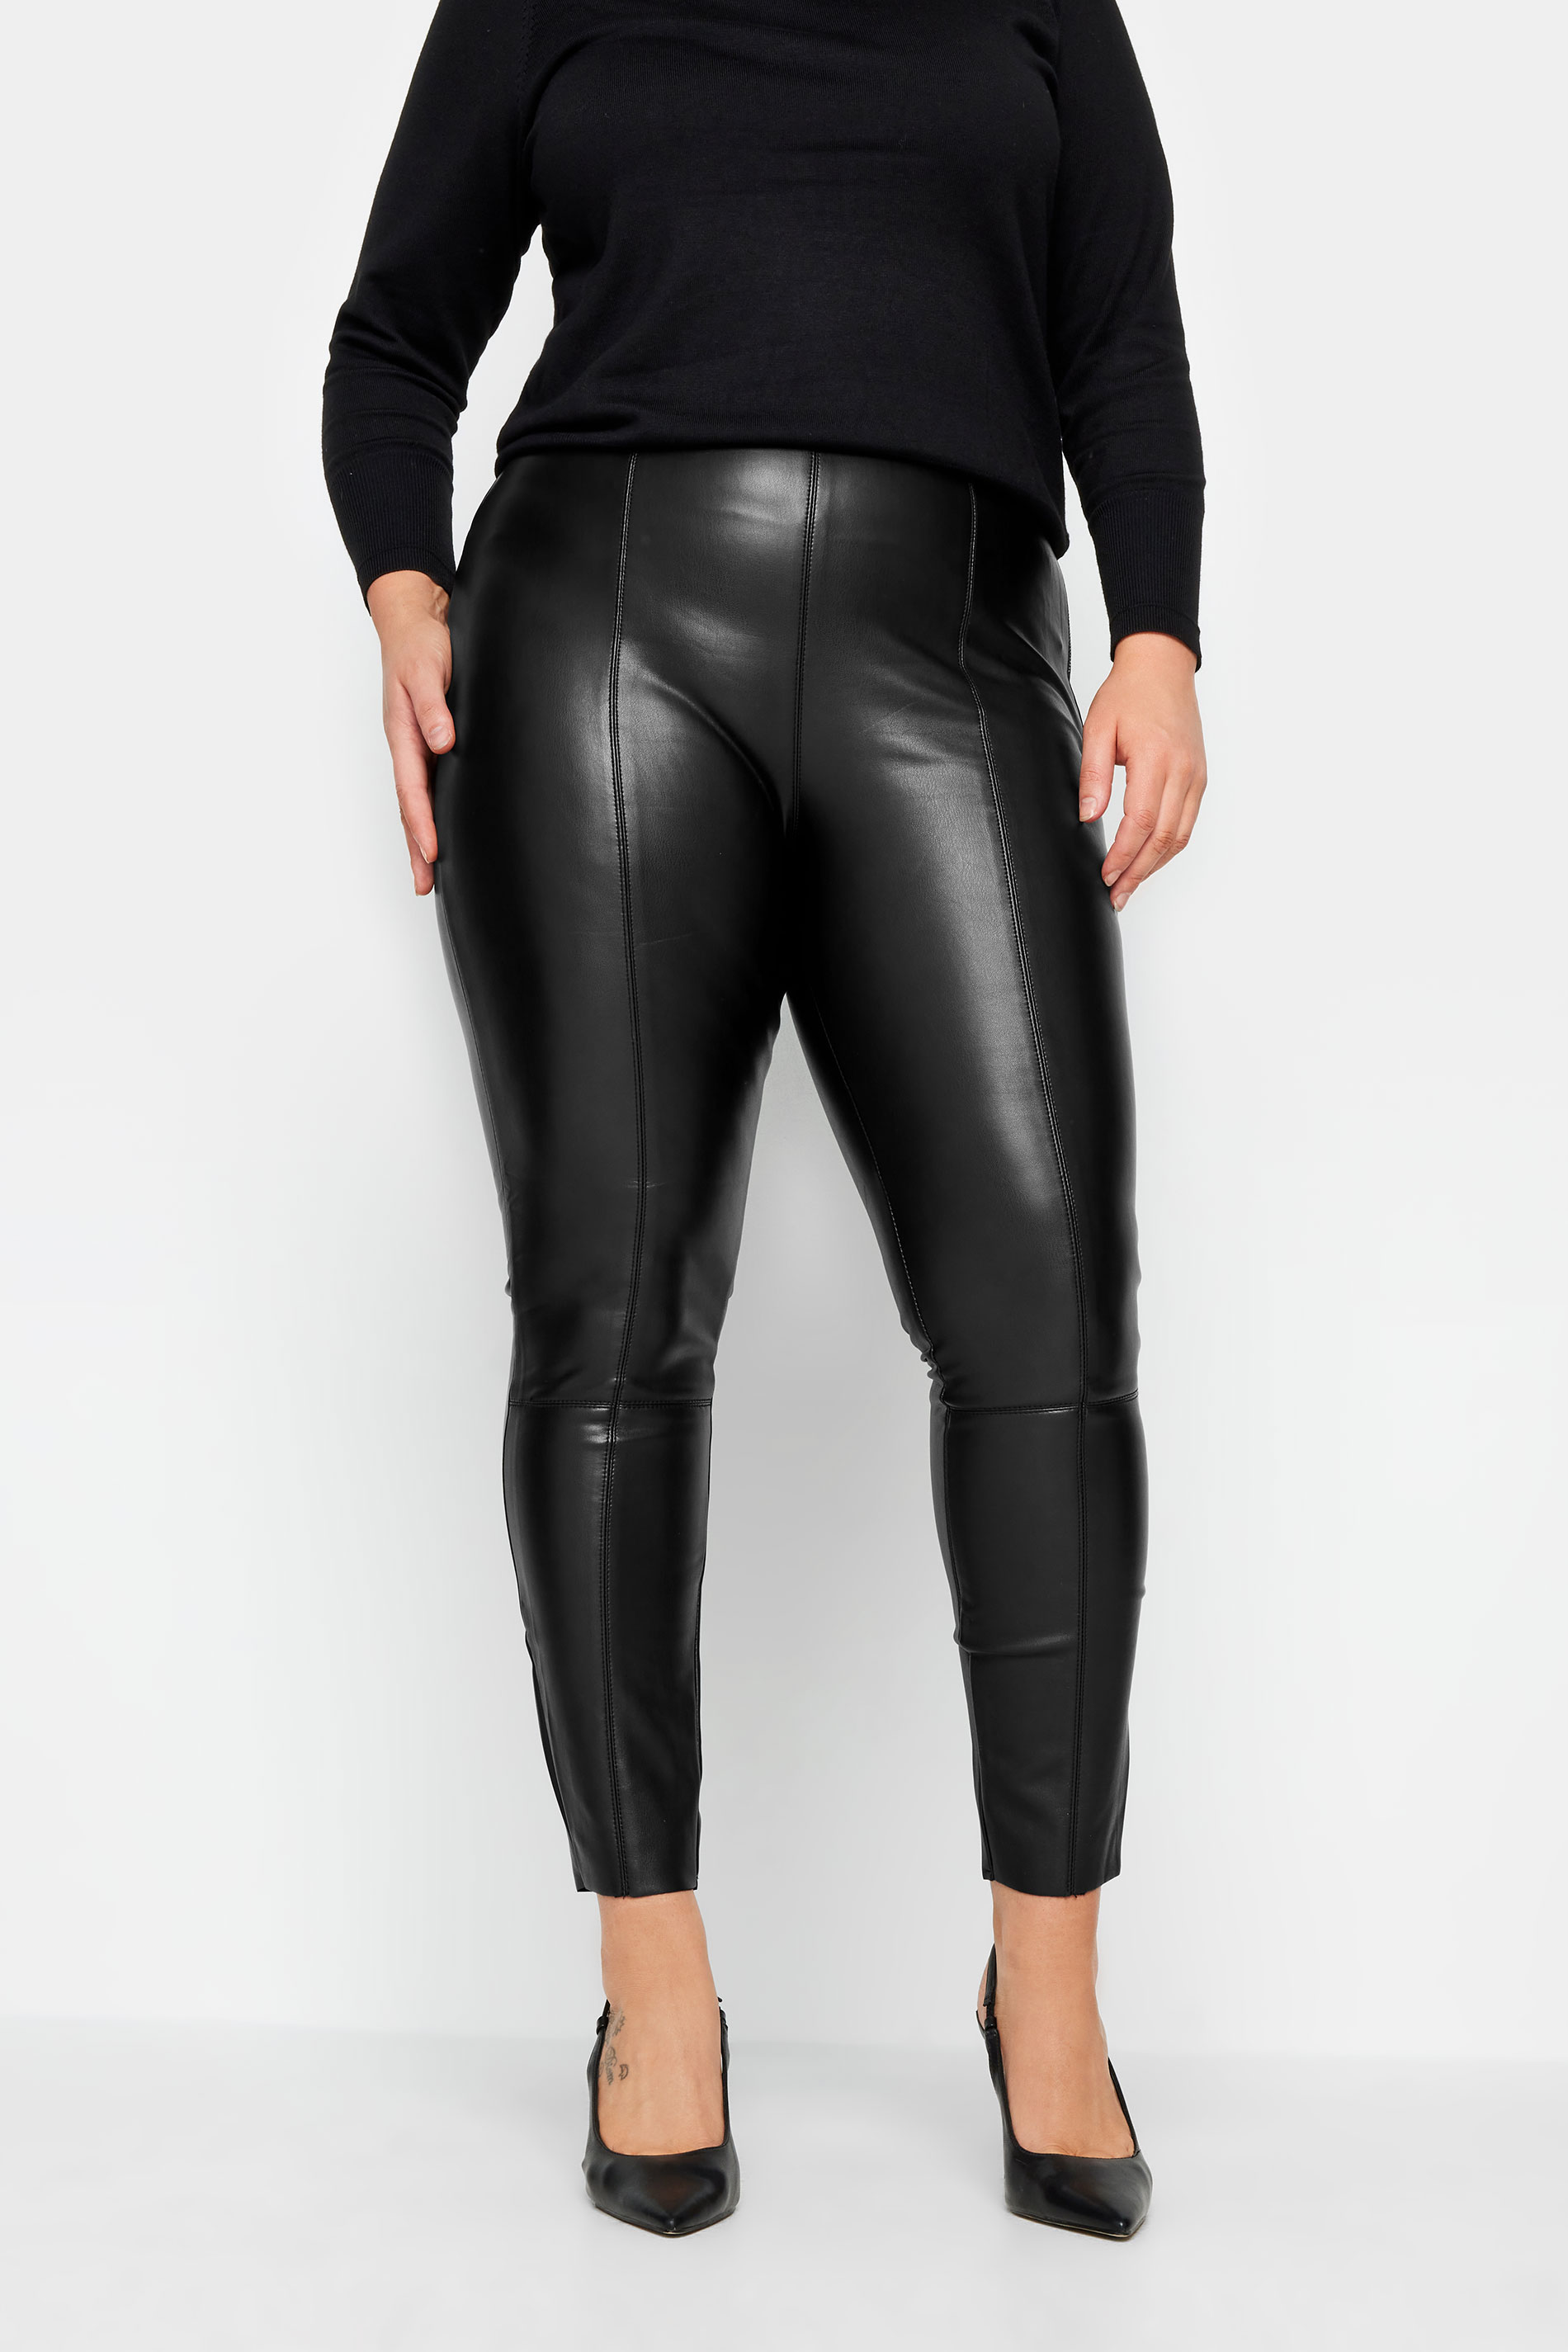 Buy MakeMeChic Women's Plus Size Faux Leather Leggings High Waist PU Leather  Split Skinny Pants, Black, Large Plus at Amazon.in